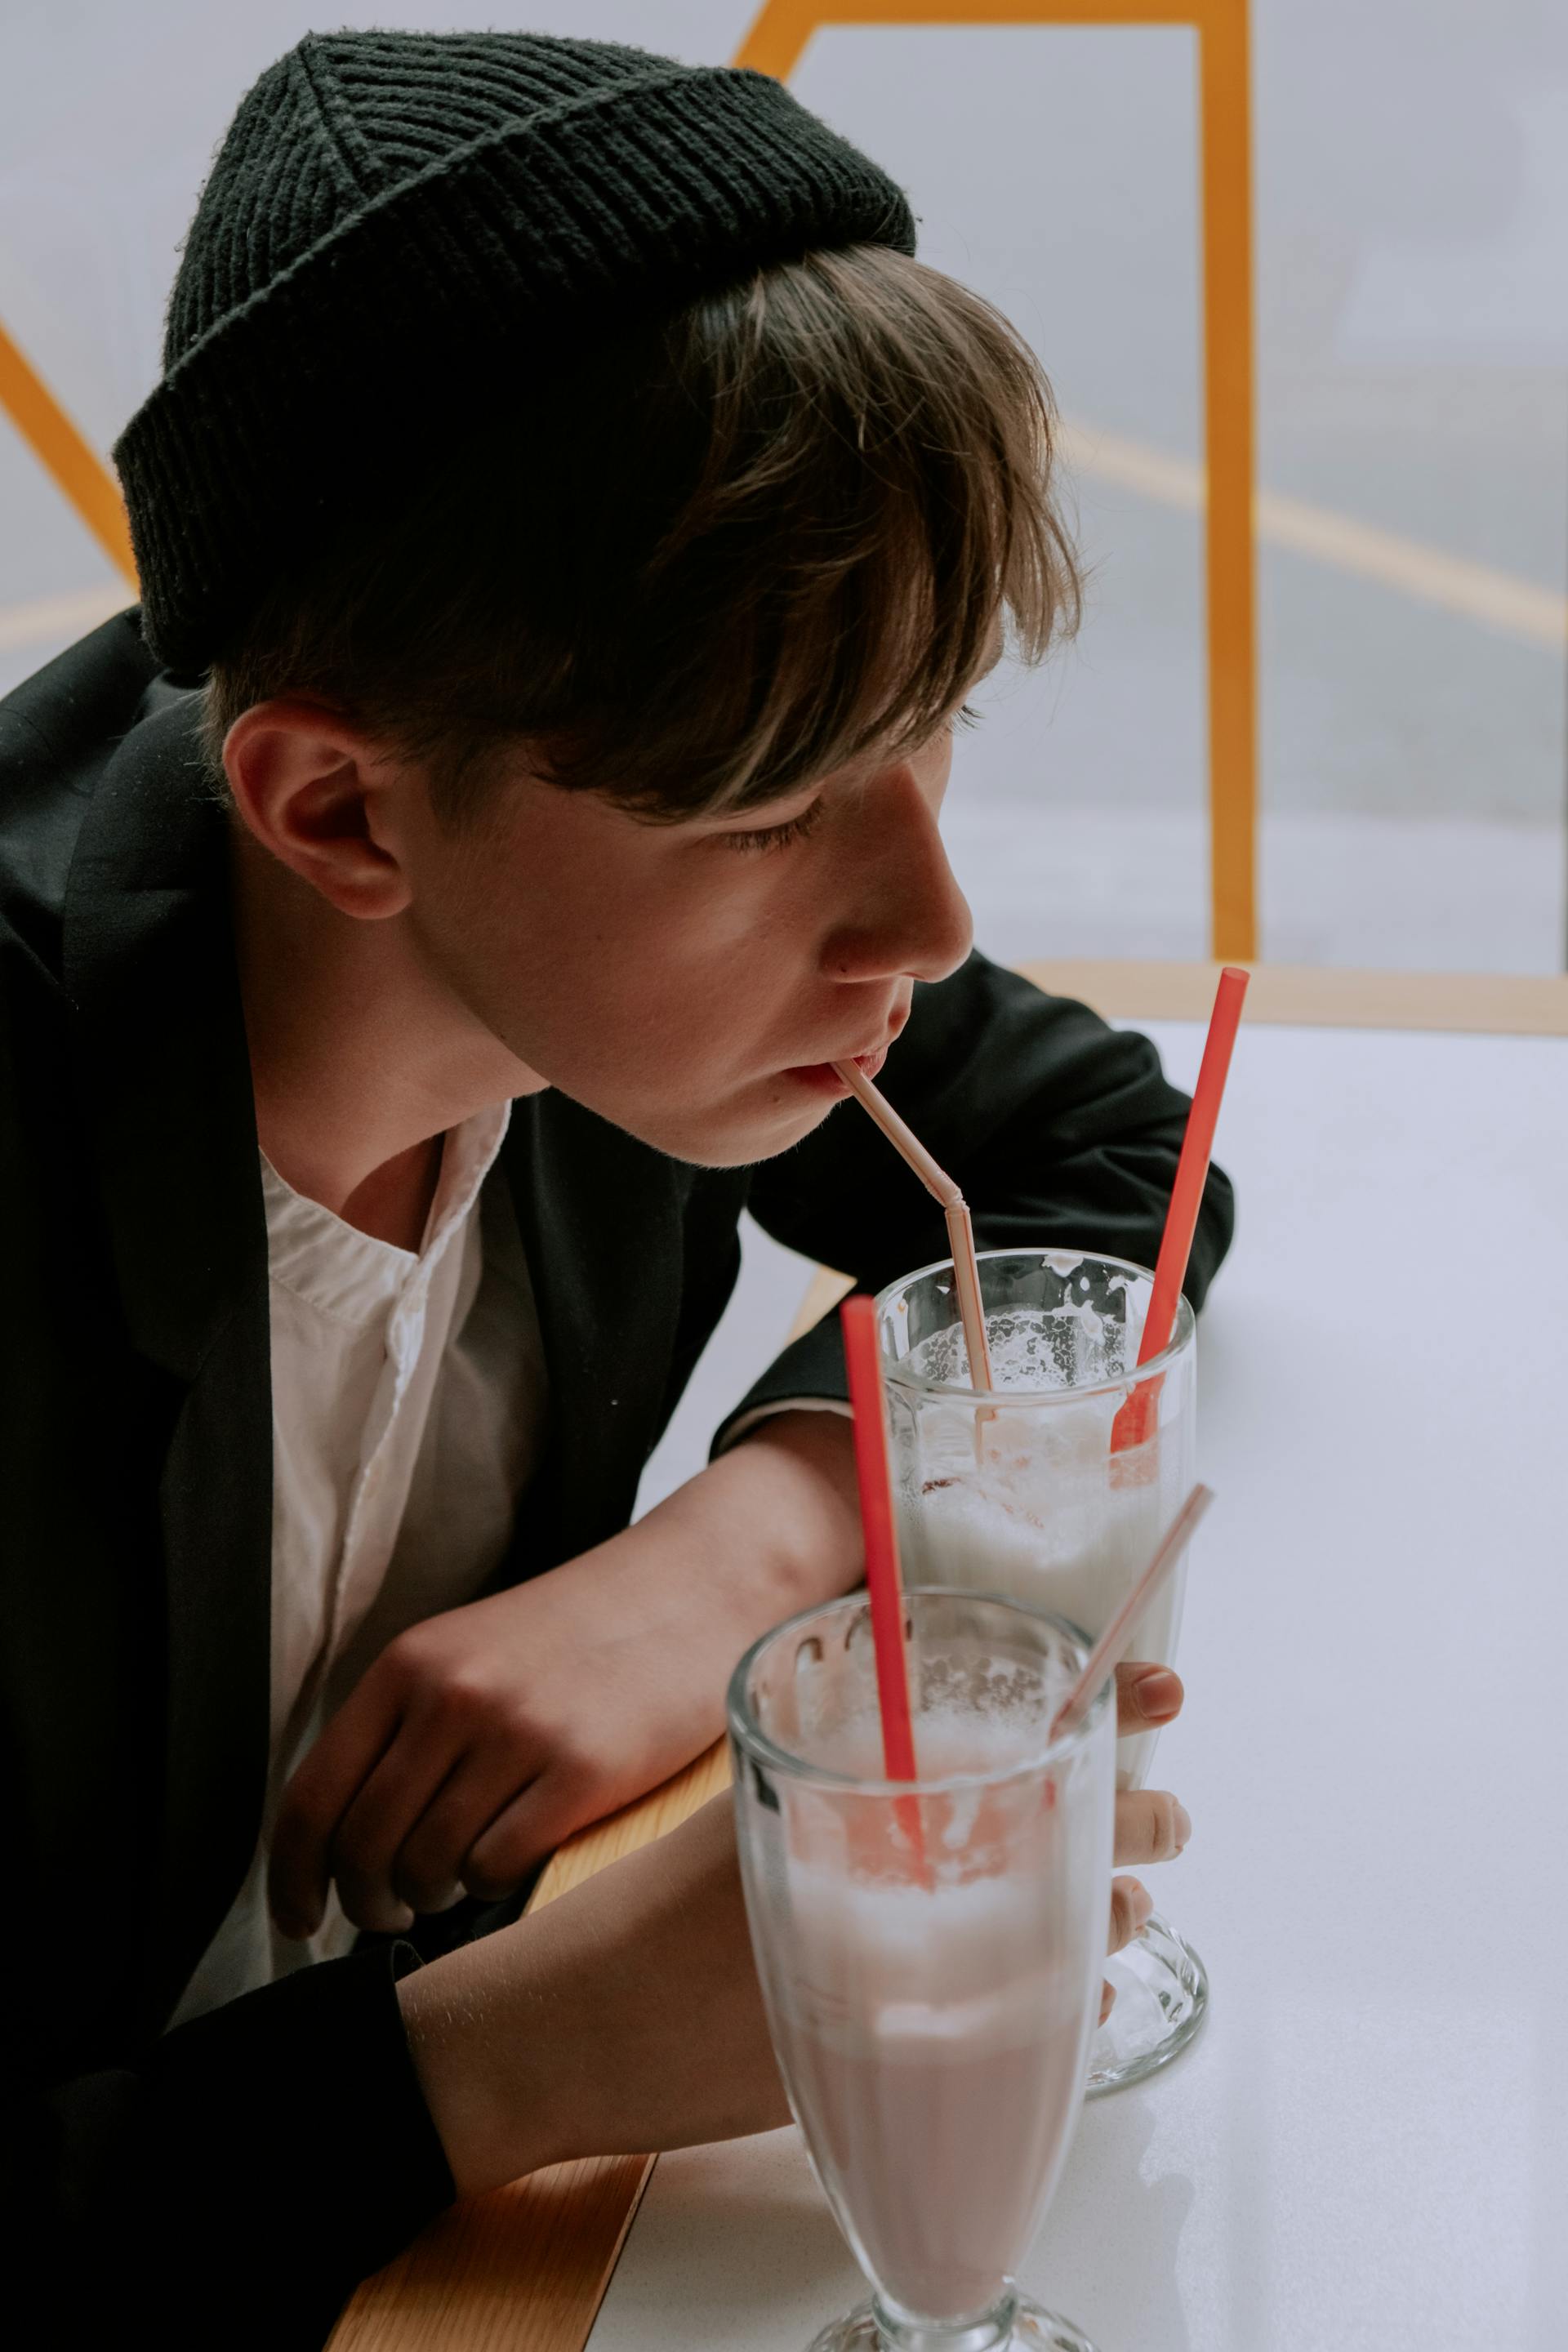 Un garçon qui boit un milkshake | Source : Pexels